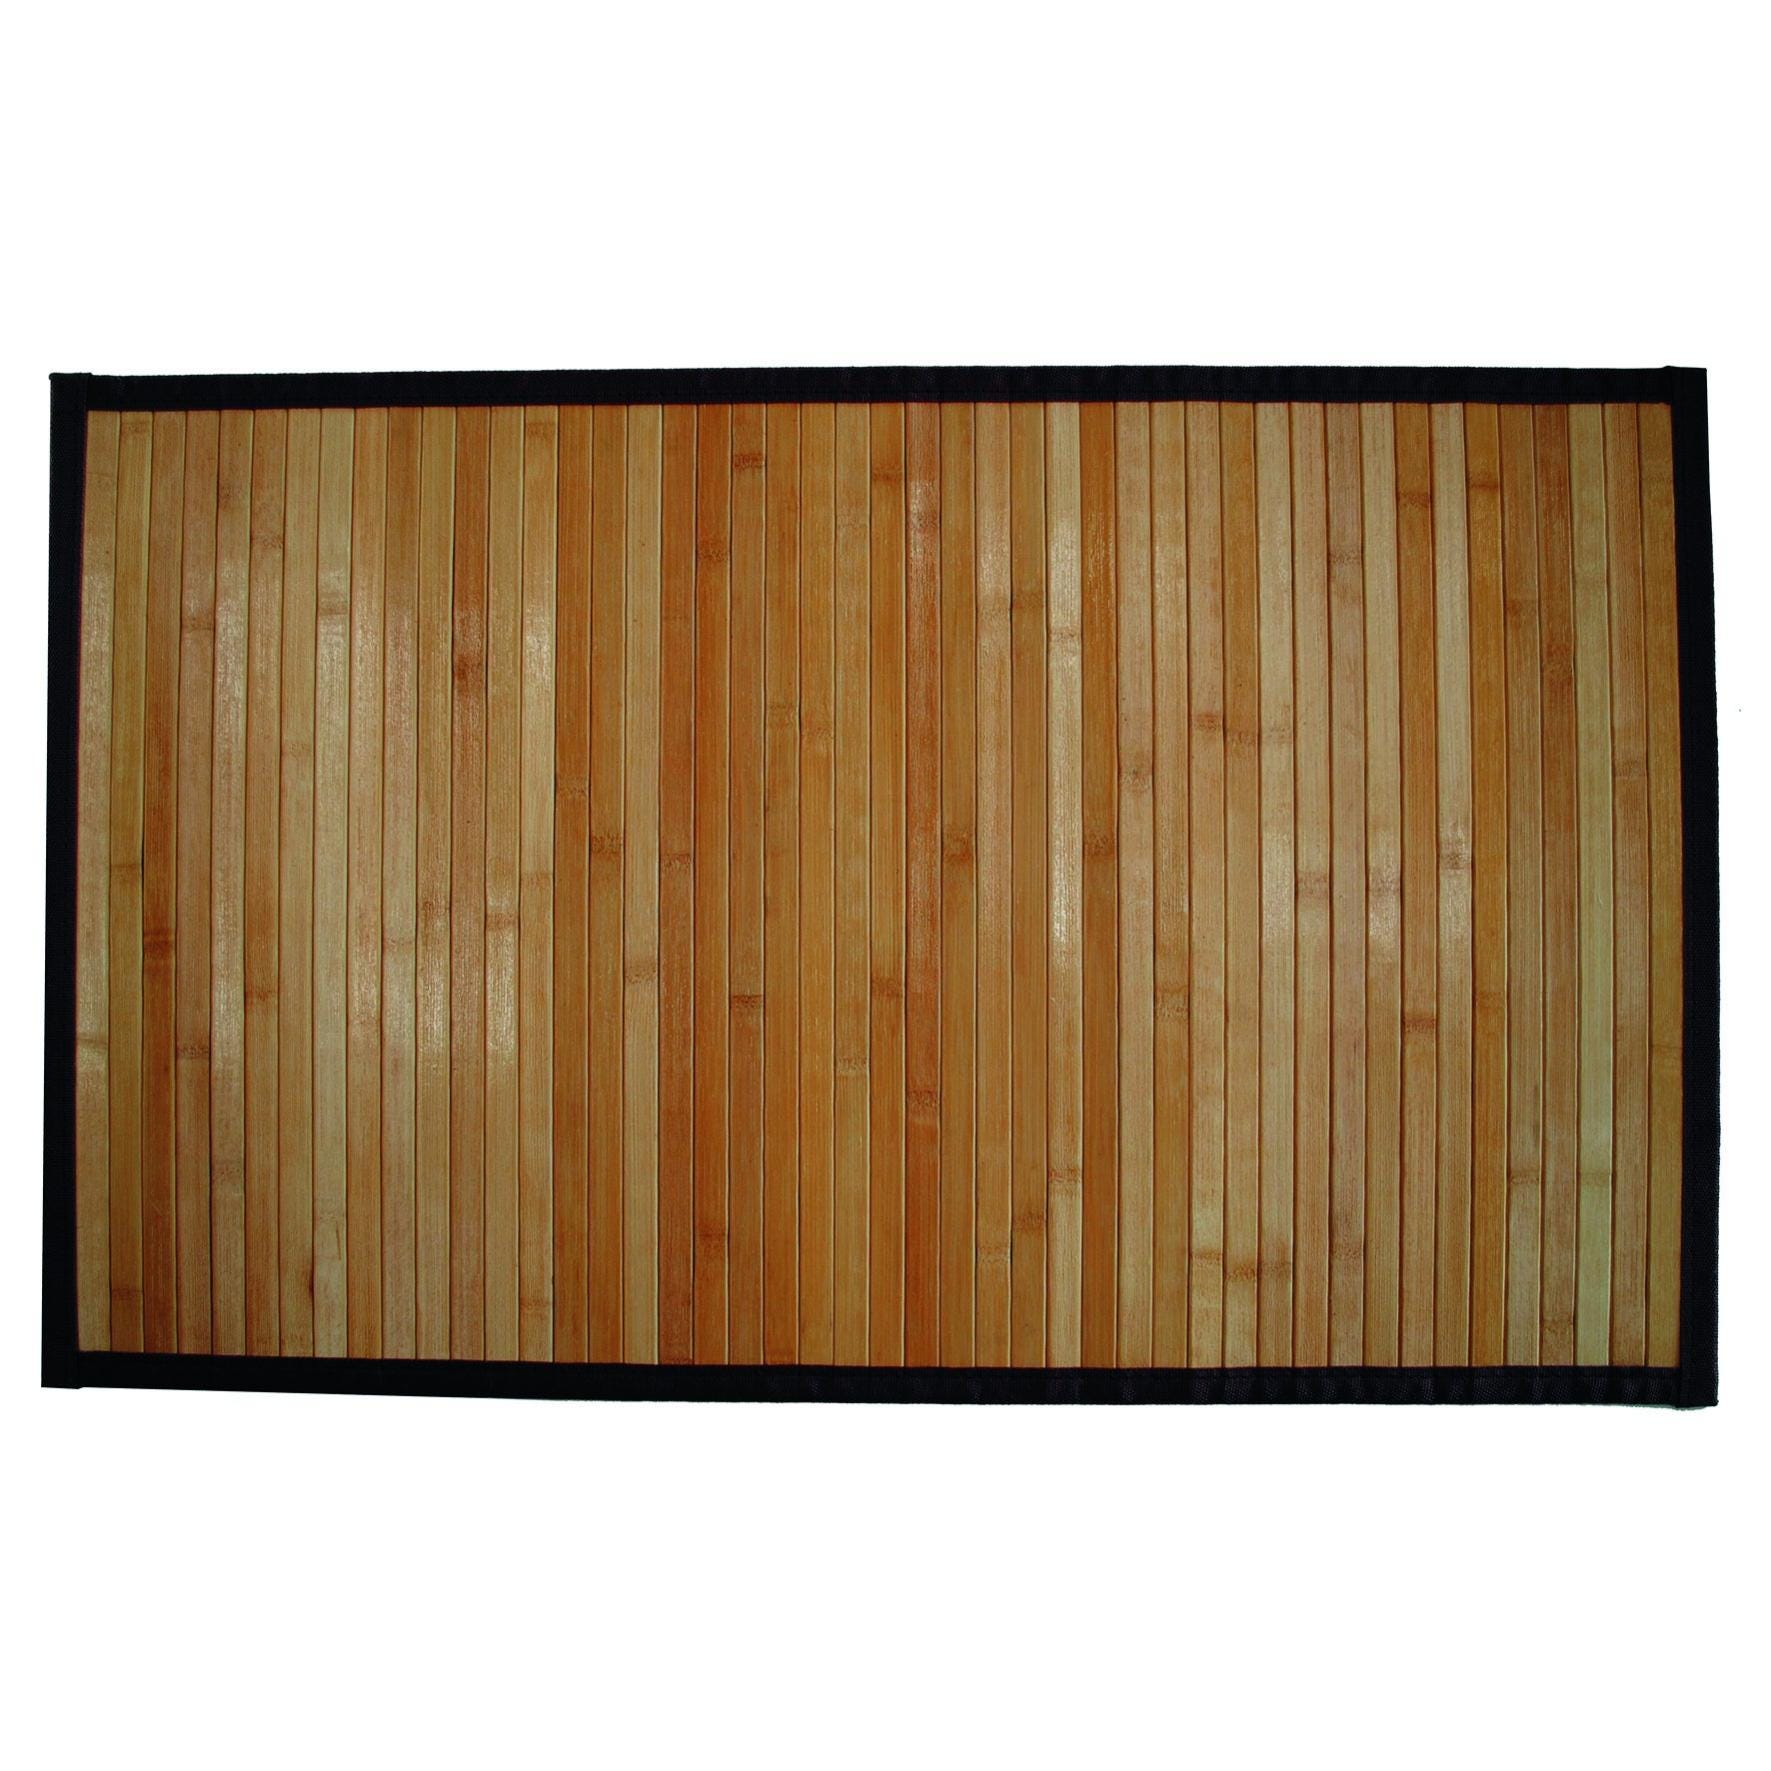 Tappeto Bamboo antiscivolo in bambù marrone, 50x280 cm